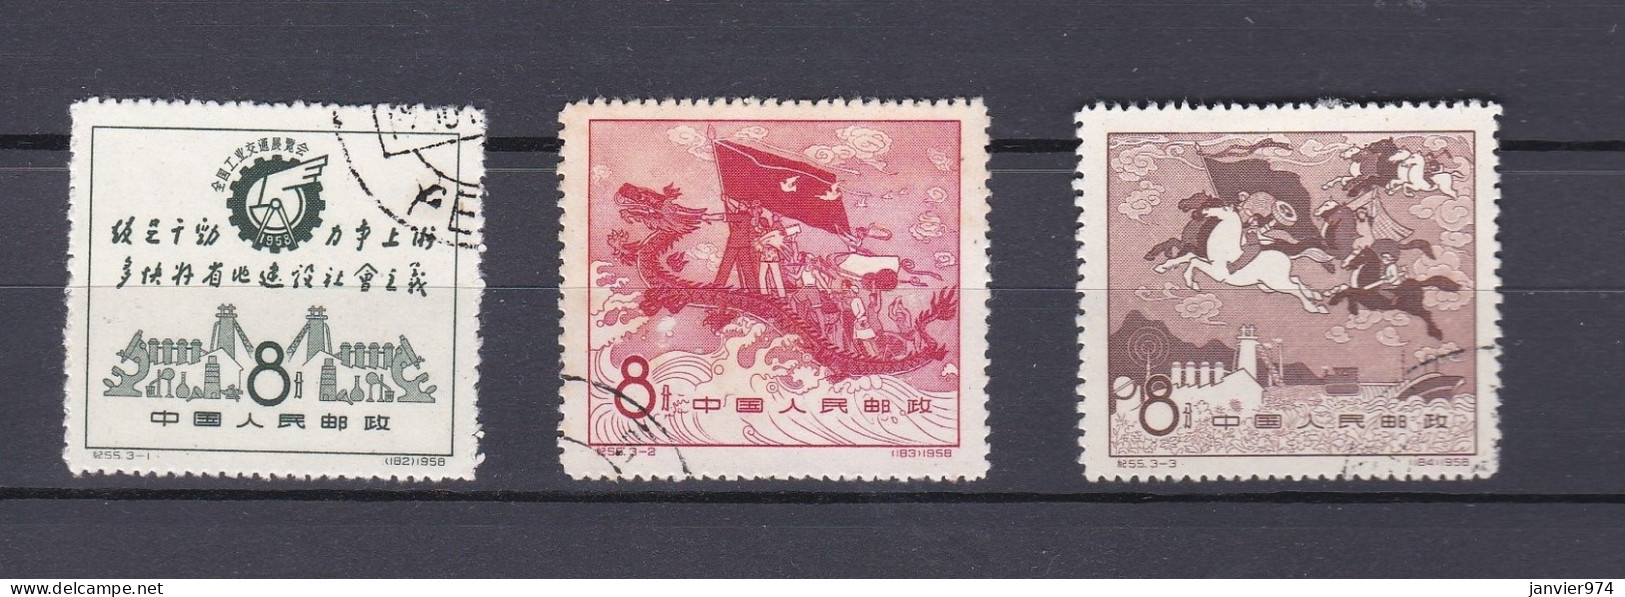 Chine 1958, La Serie Complete, Salon National De L'industrie Et Des Transports, 3 Timbres  - Used Stamps